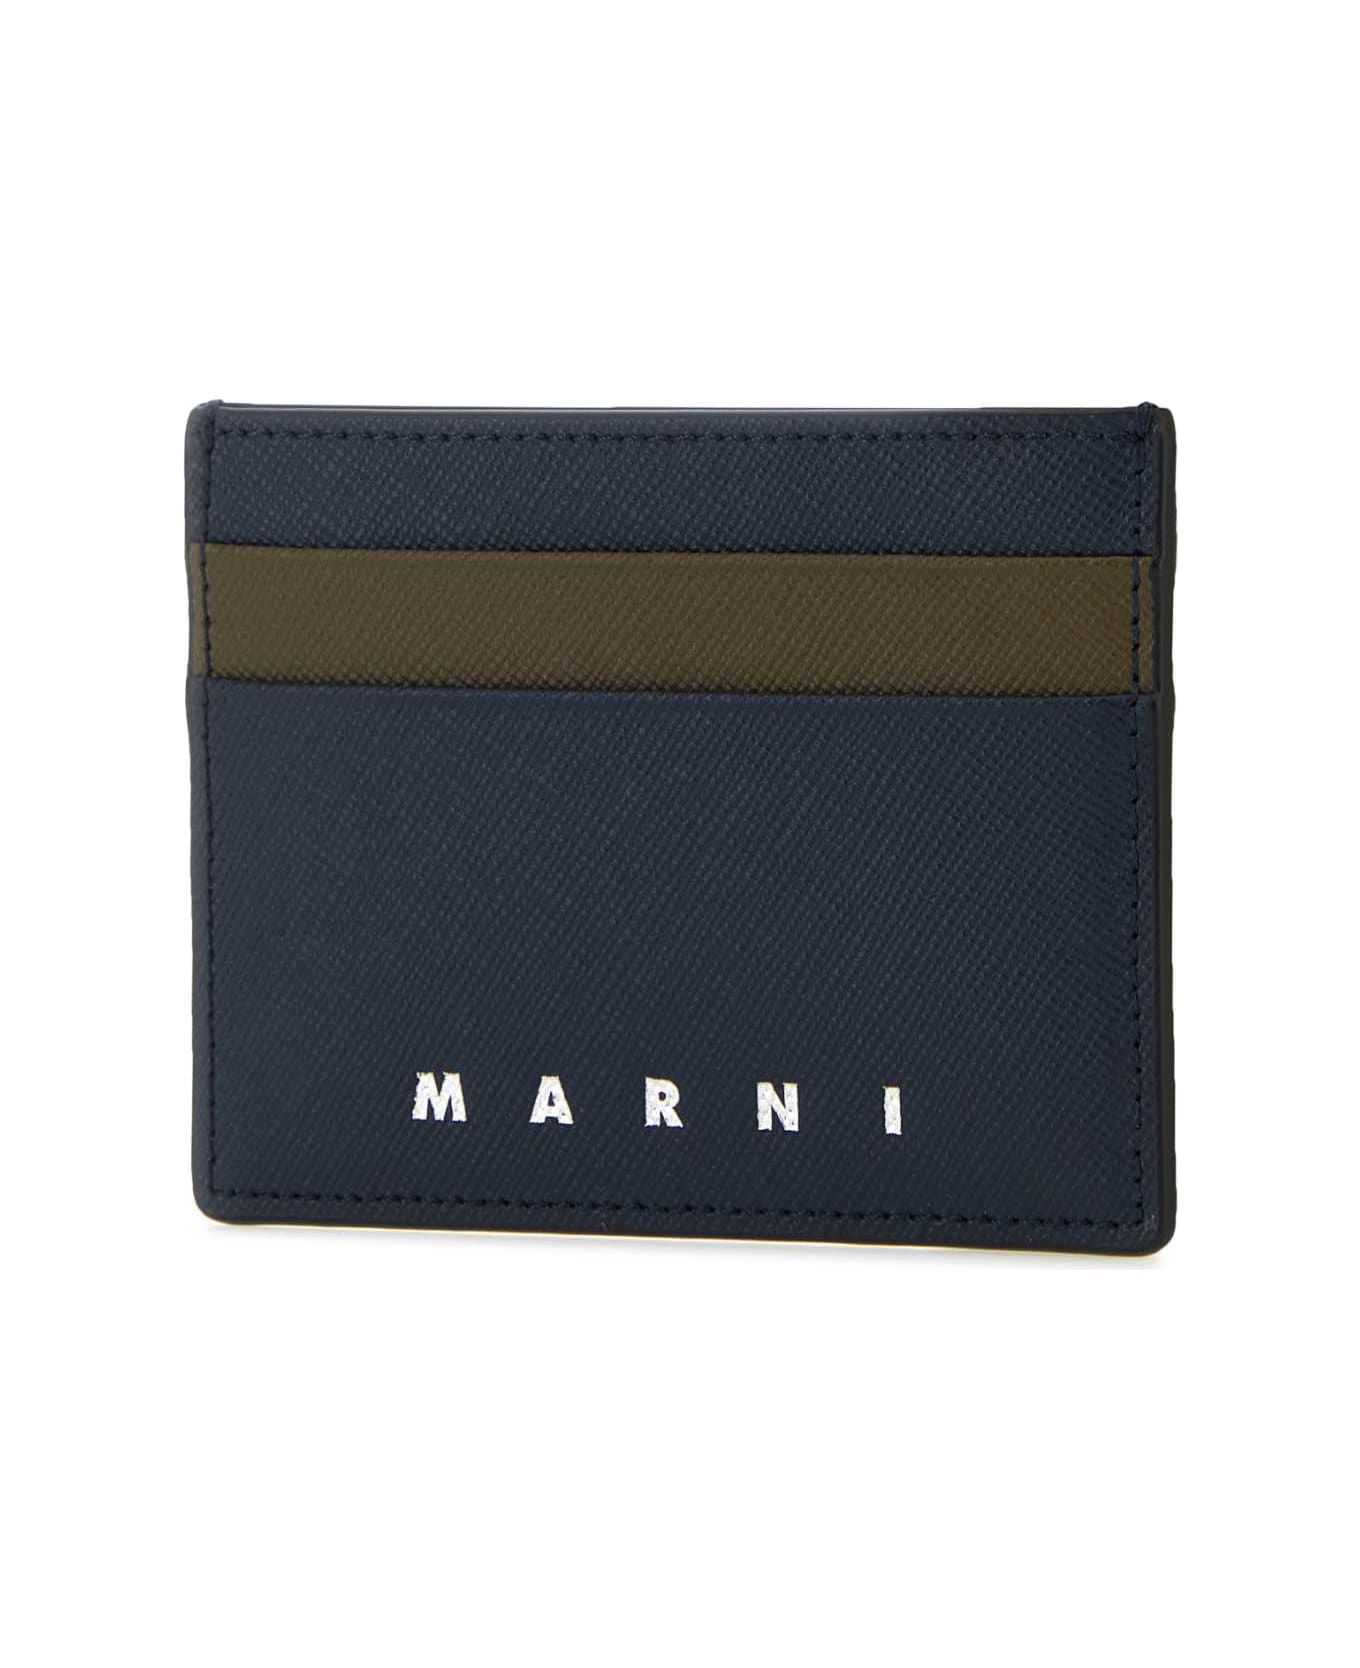 Marni Two-tone Leather Cardholder - NIGHTBLUEDUSTYOLIVE 財布